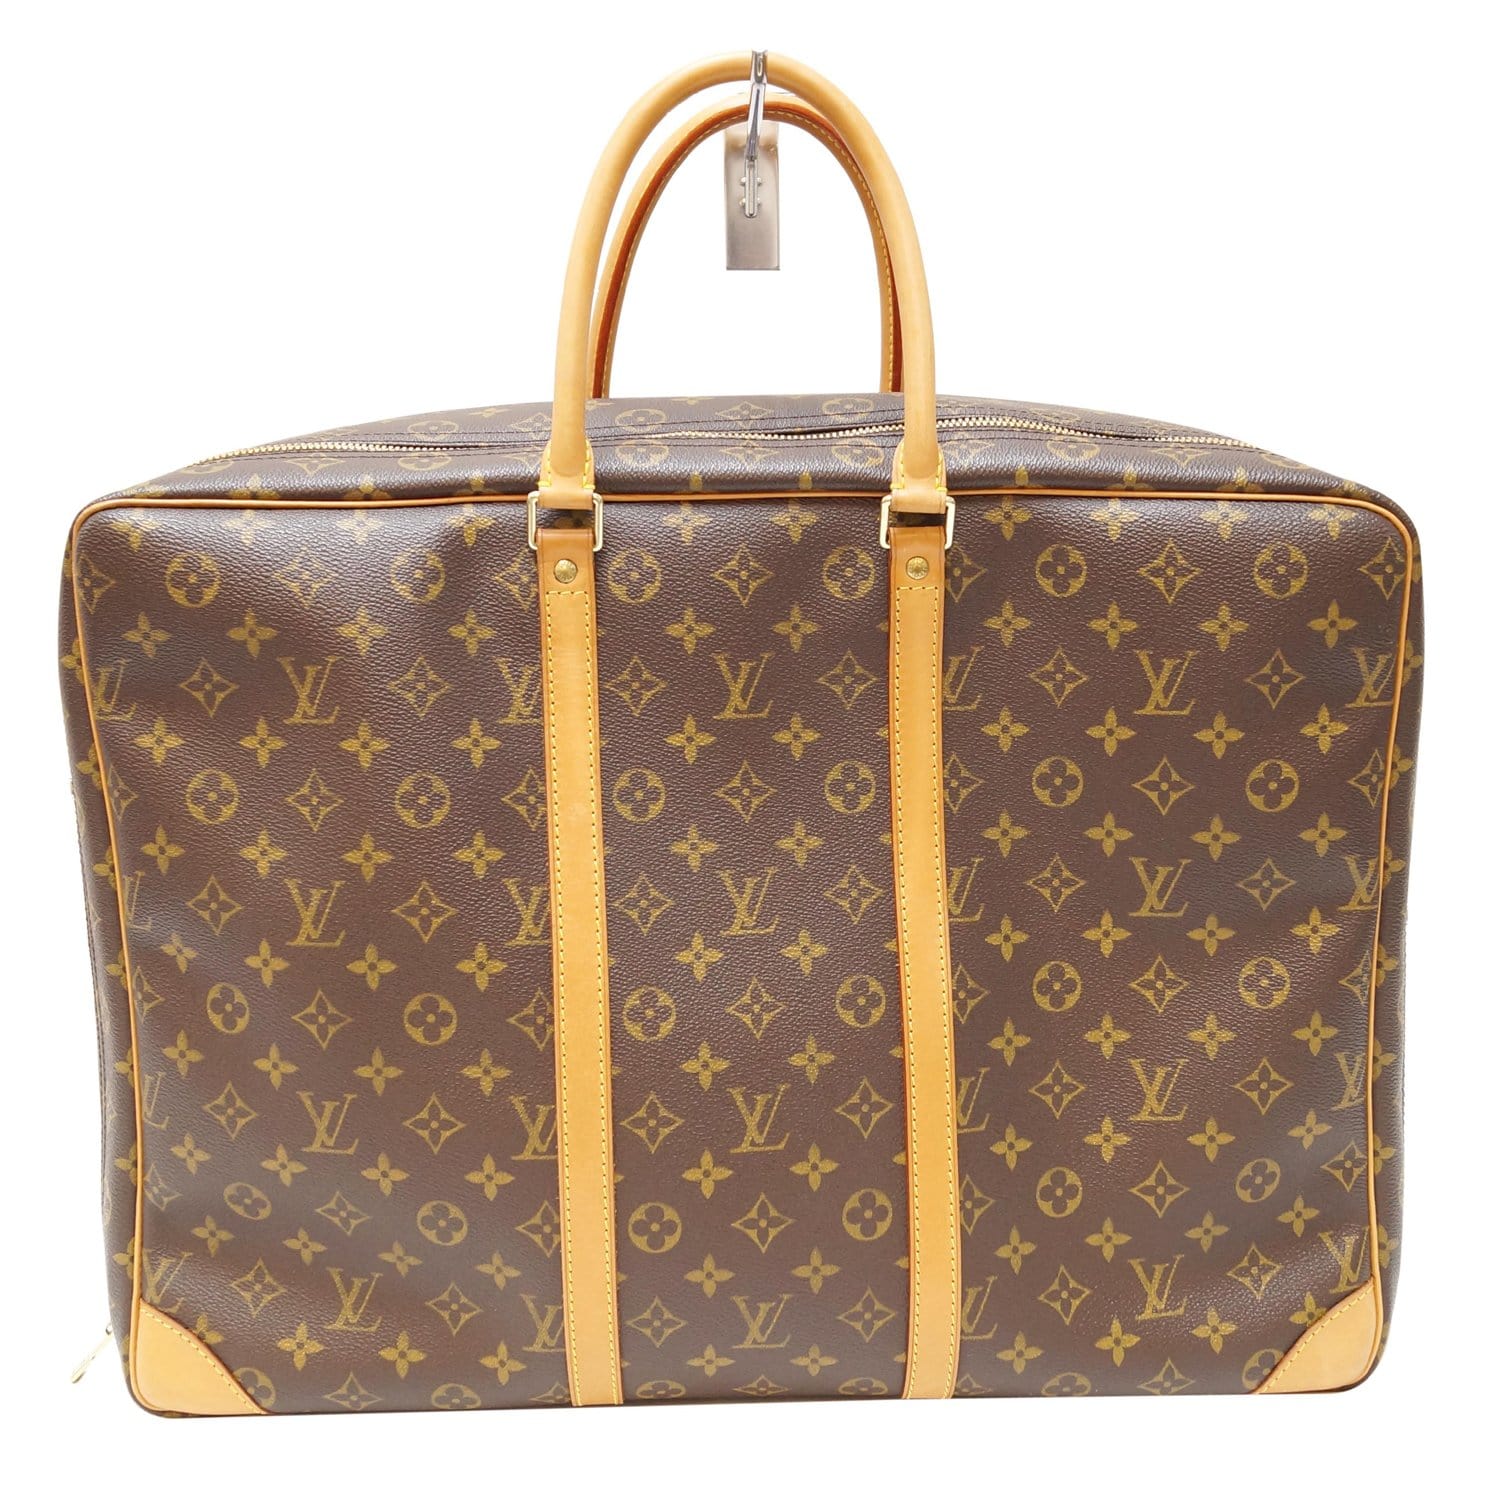 Louis Vuitton Sirius 50 Monogram Canvas Travel Bag on SALE